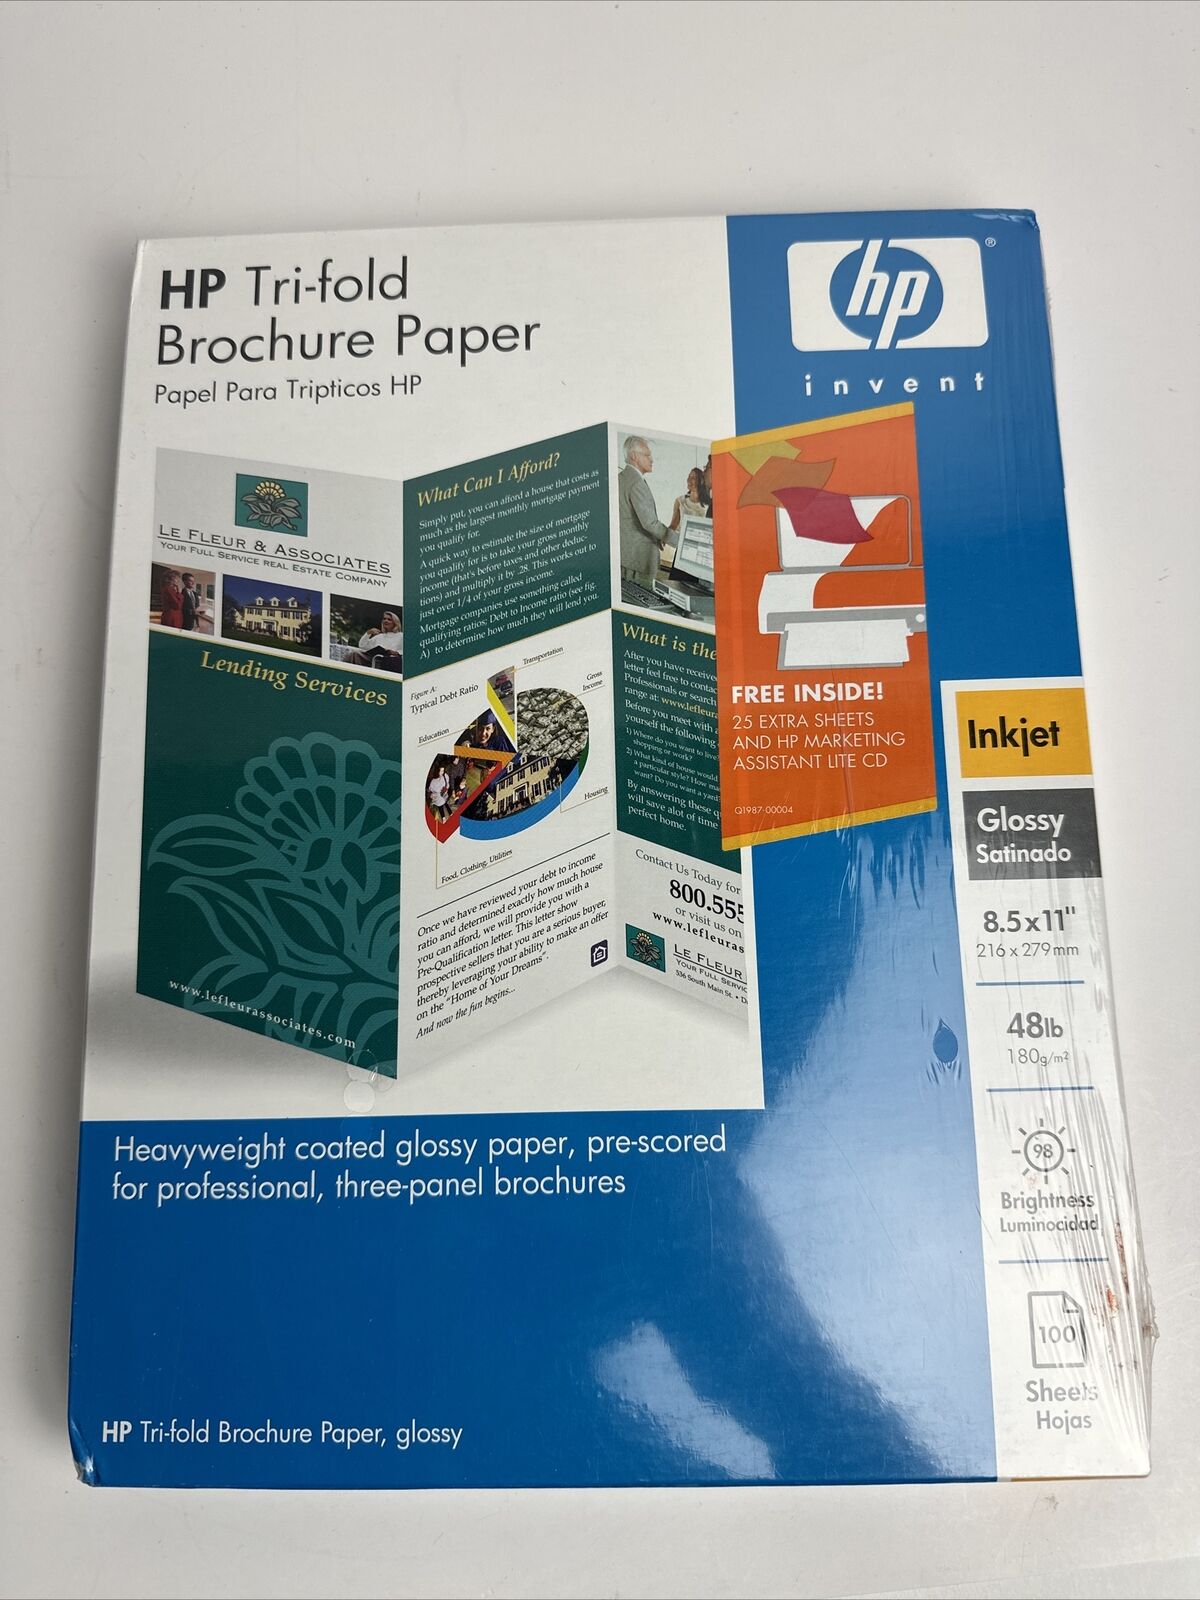 HP C7020A Inkjet Tri-Fold Brochure Paper Gloss 100 Sheets 8.5”x11” New 25 Extra